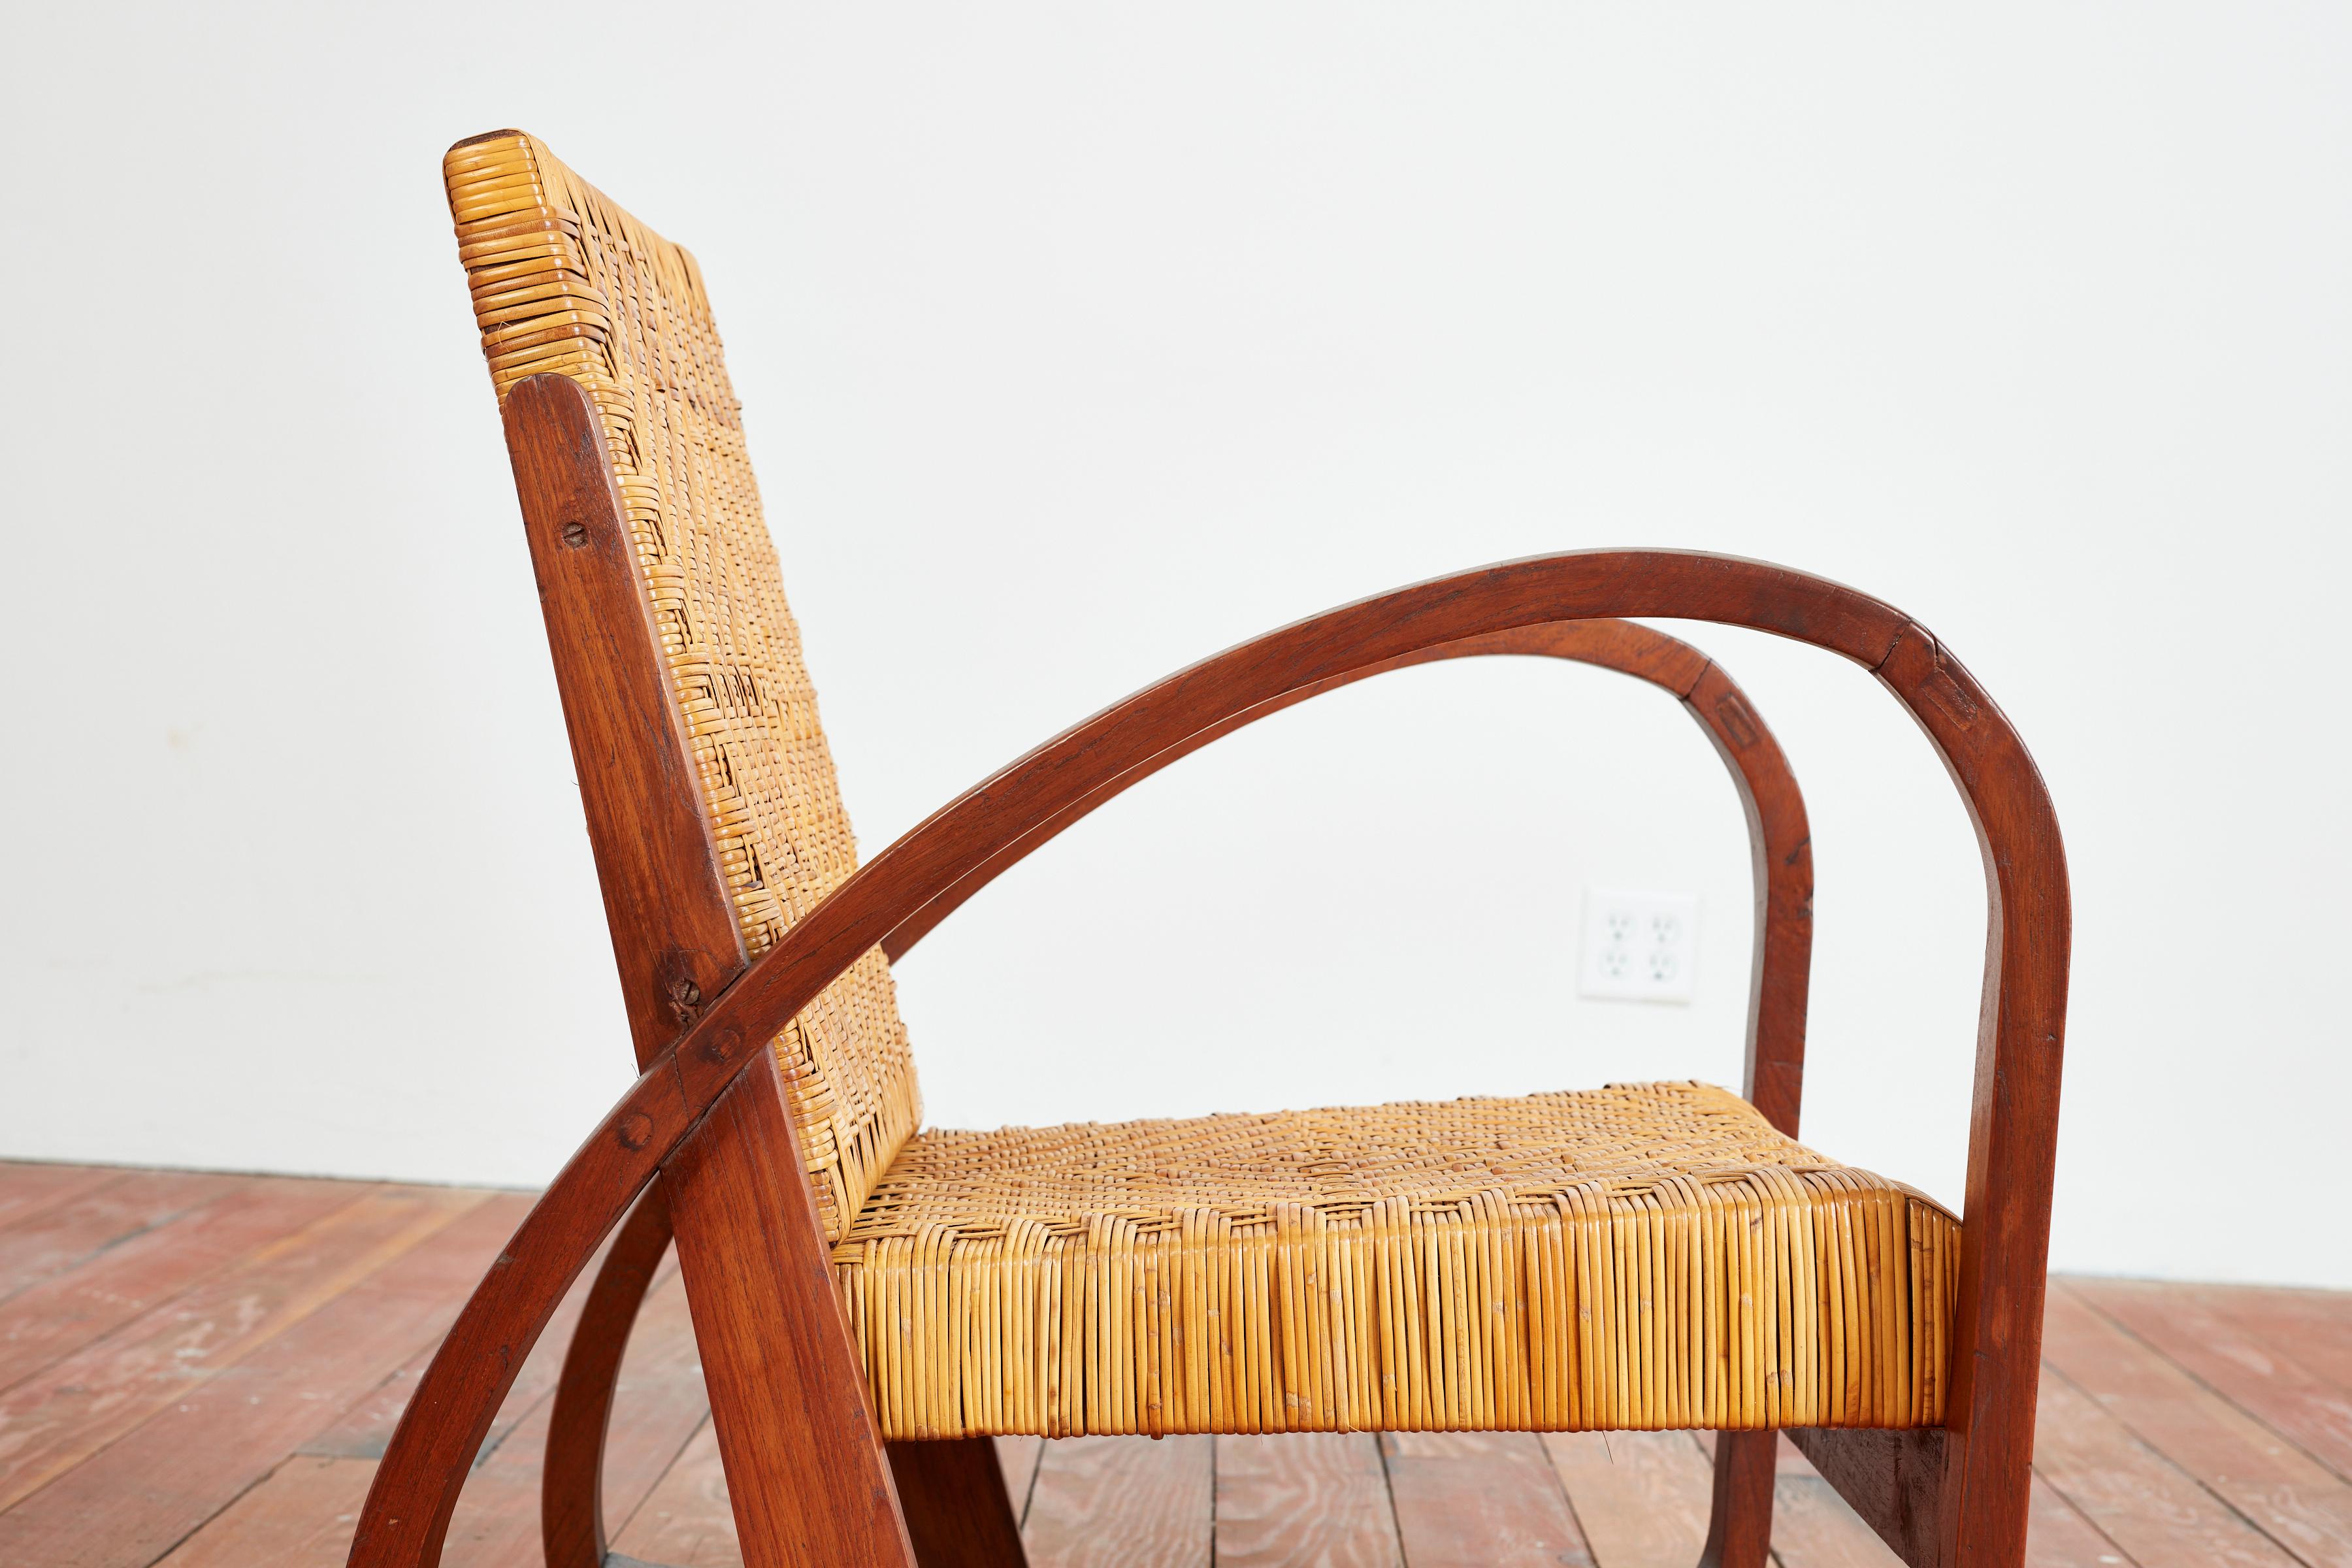 Wicker Wood Chairs 3